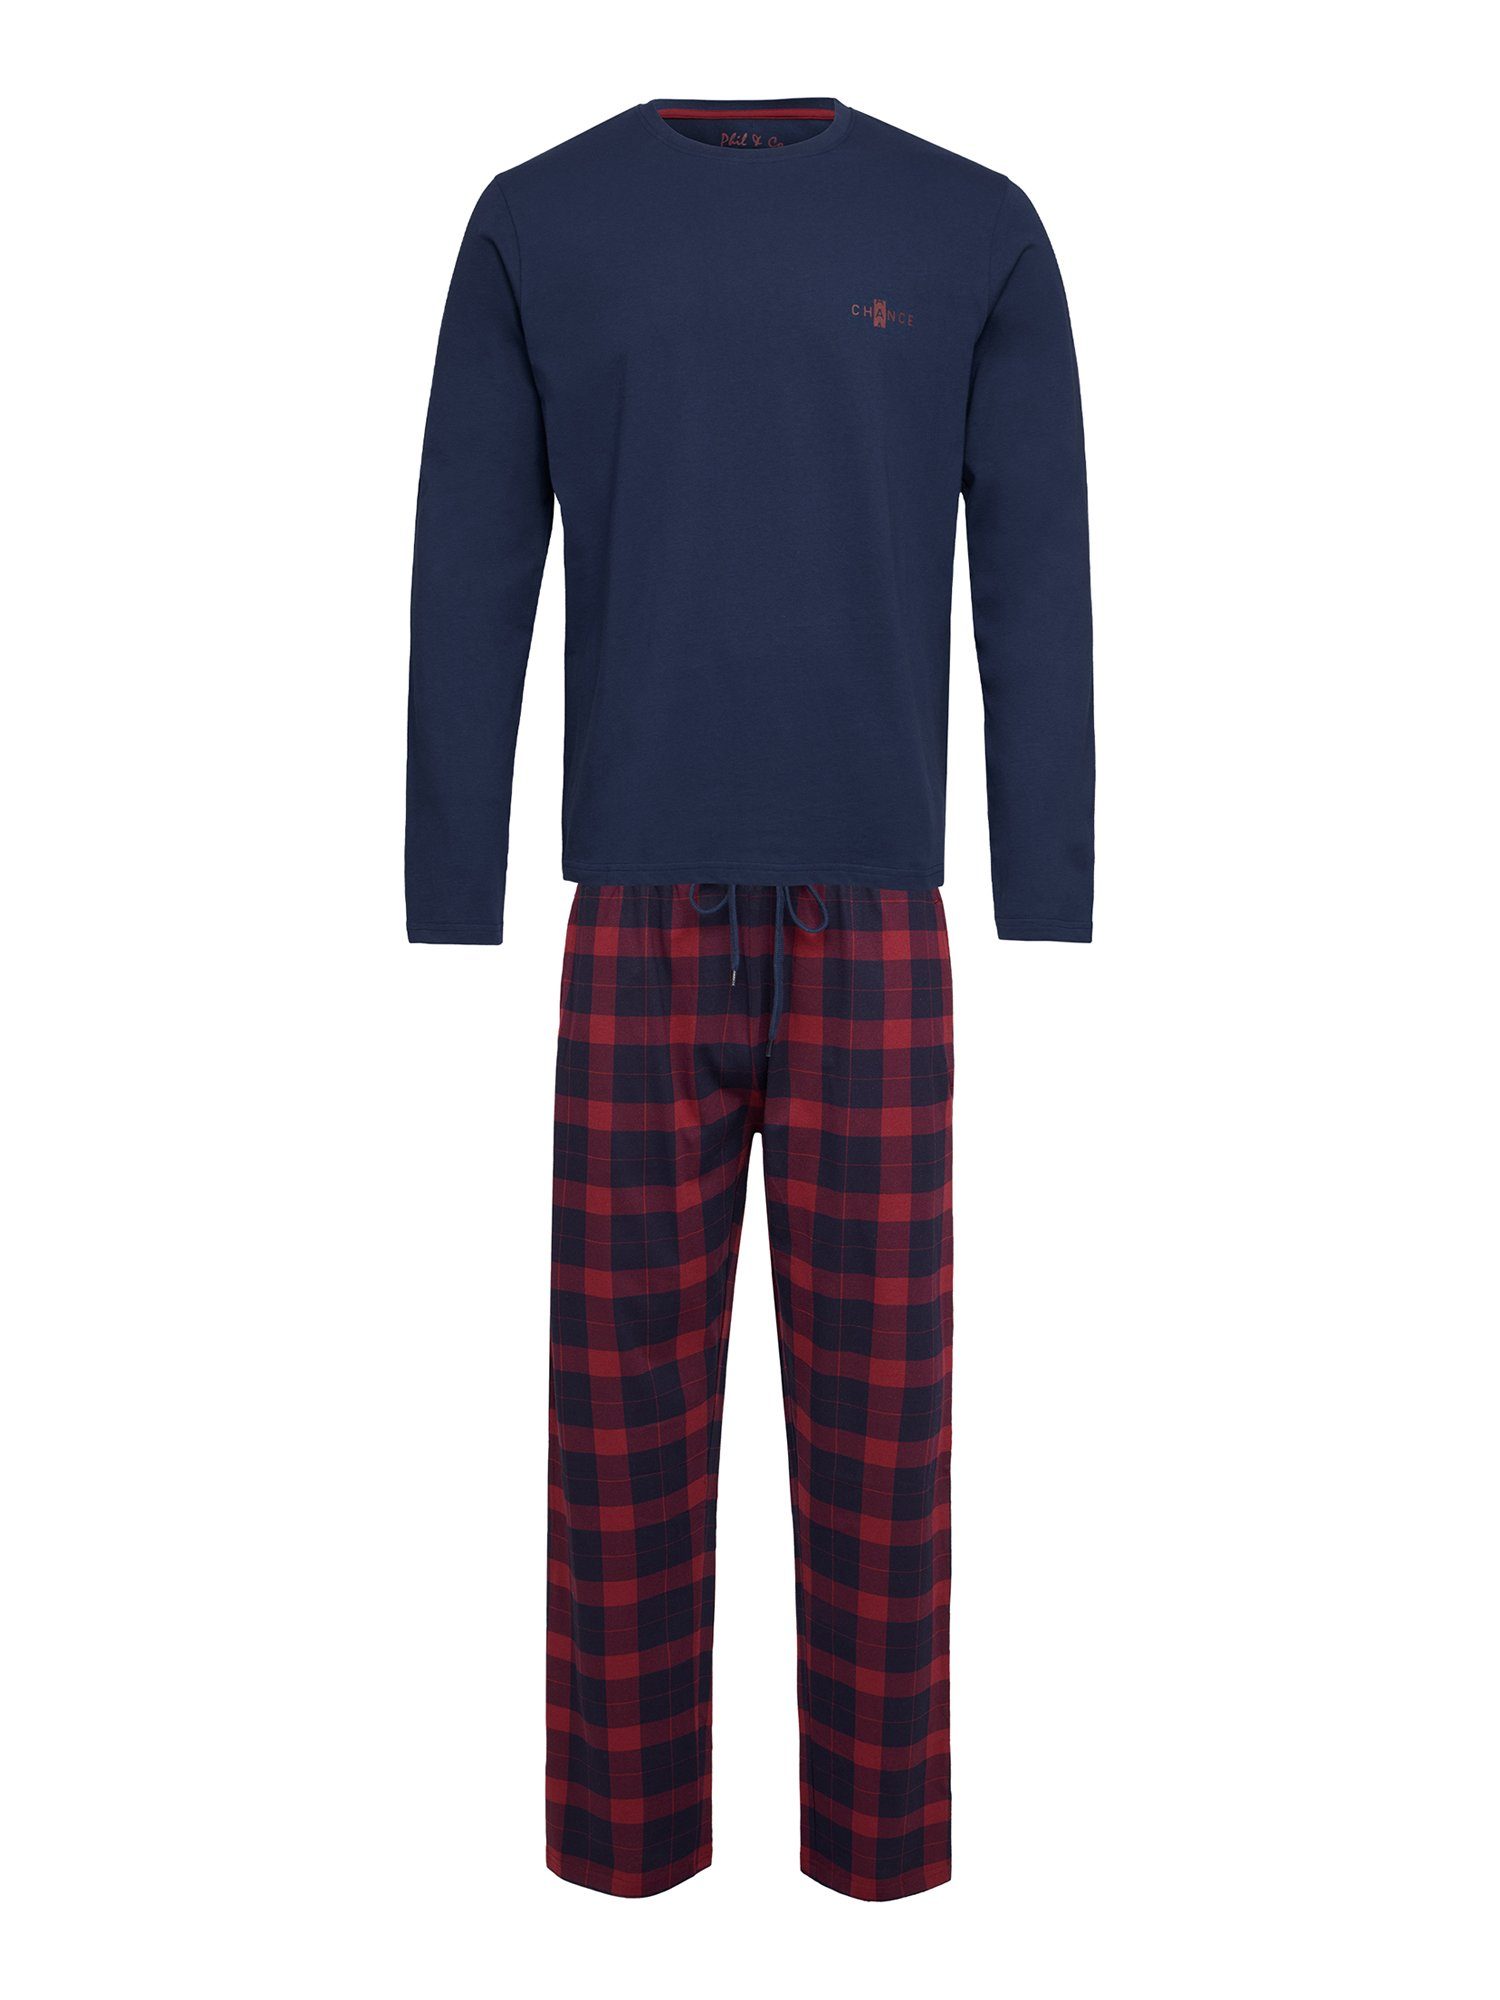 Phil & Co. Pyjama Special blau-rot tlg) bequem (2 schlafmode schlafanzug